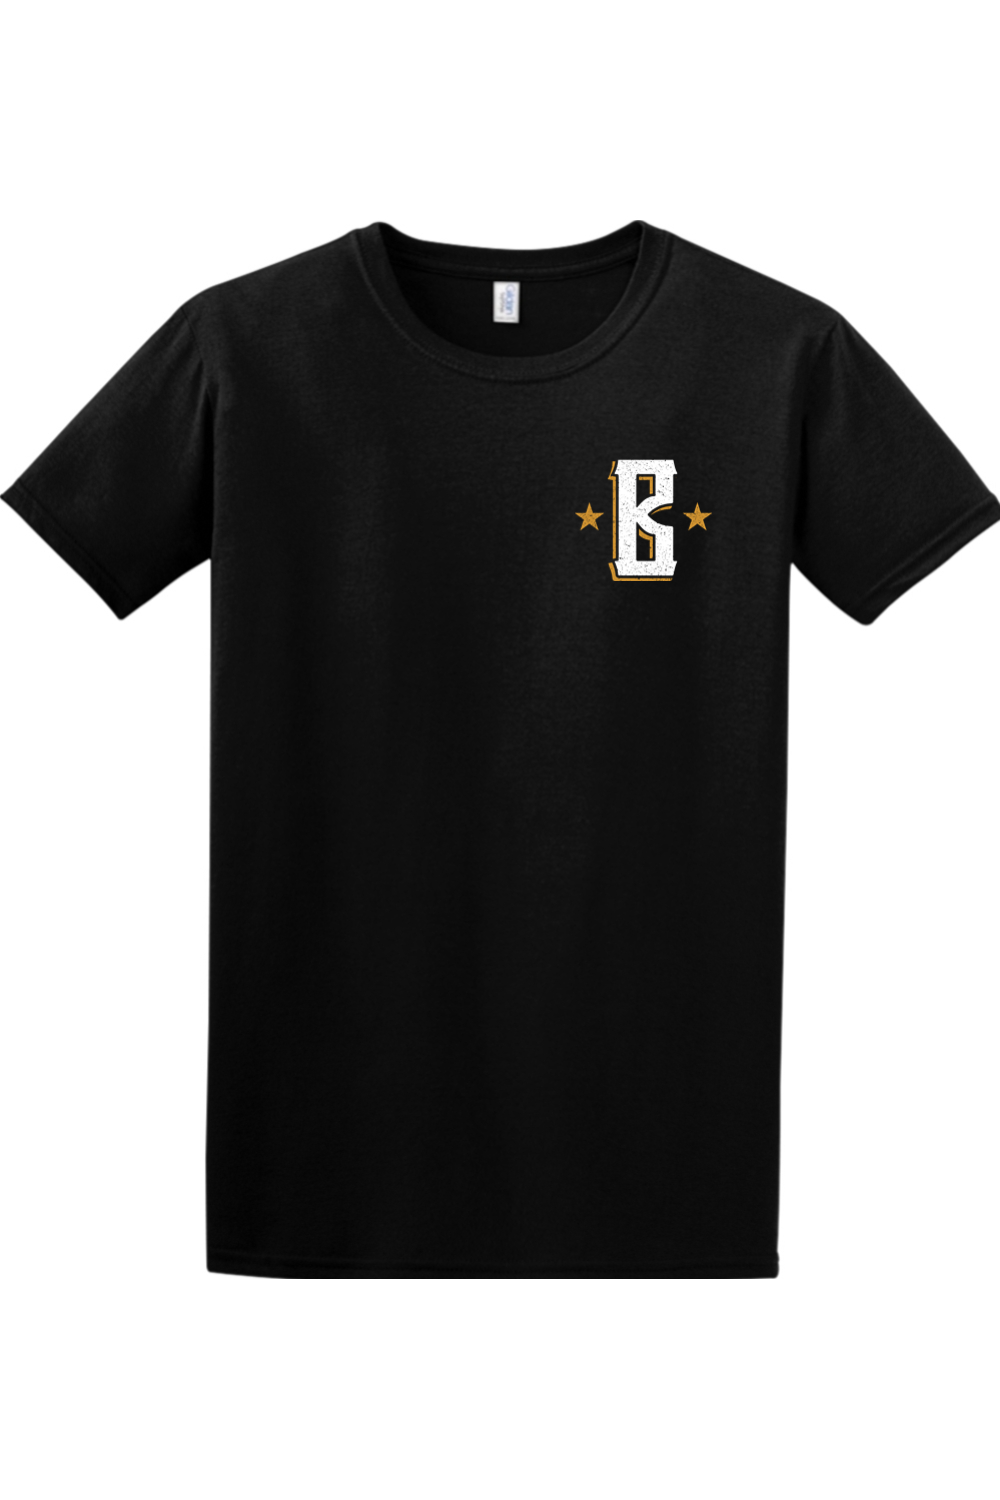 Barrett's Alehouse West Bridgewater T-Shirt